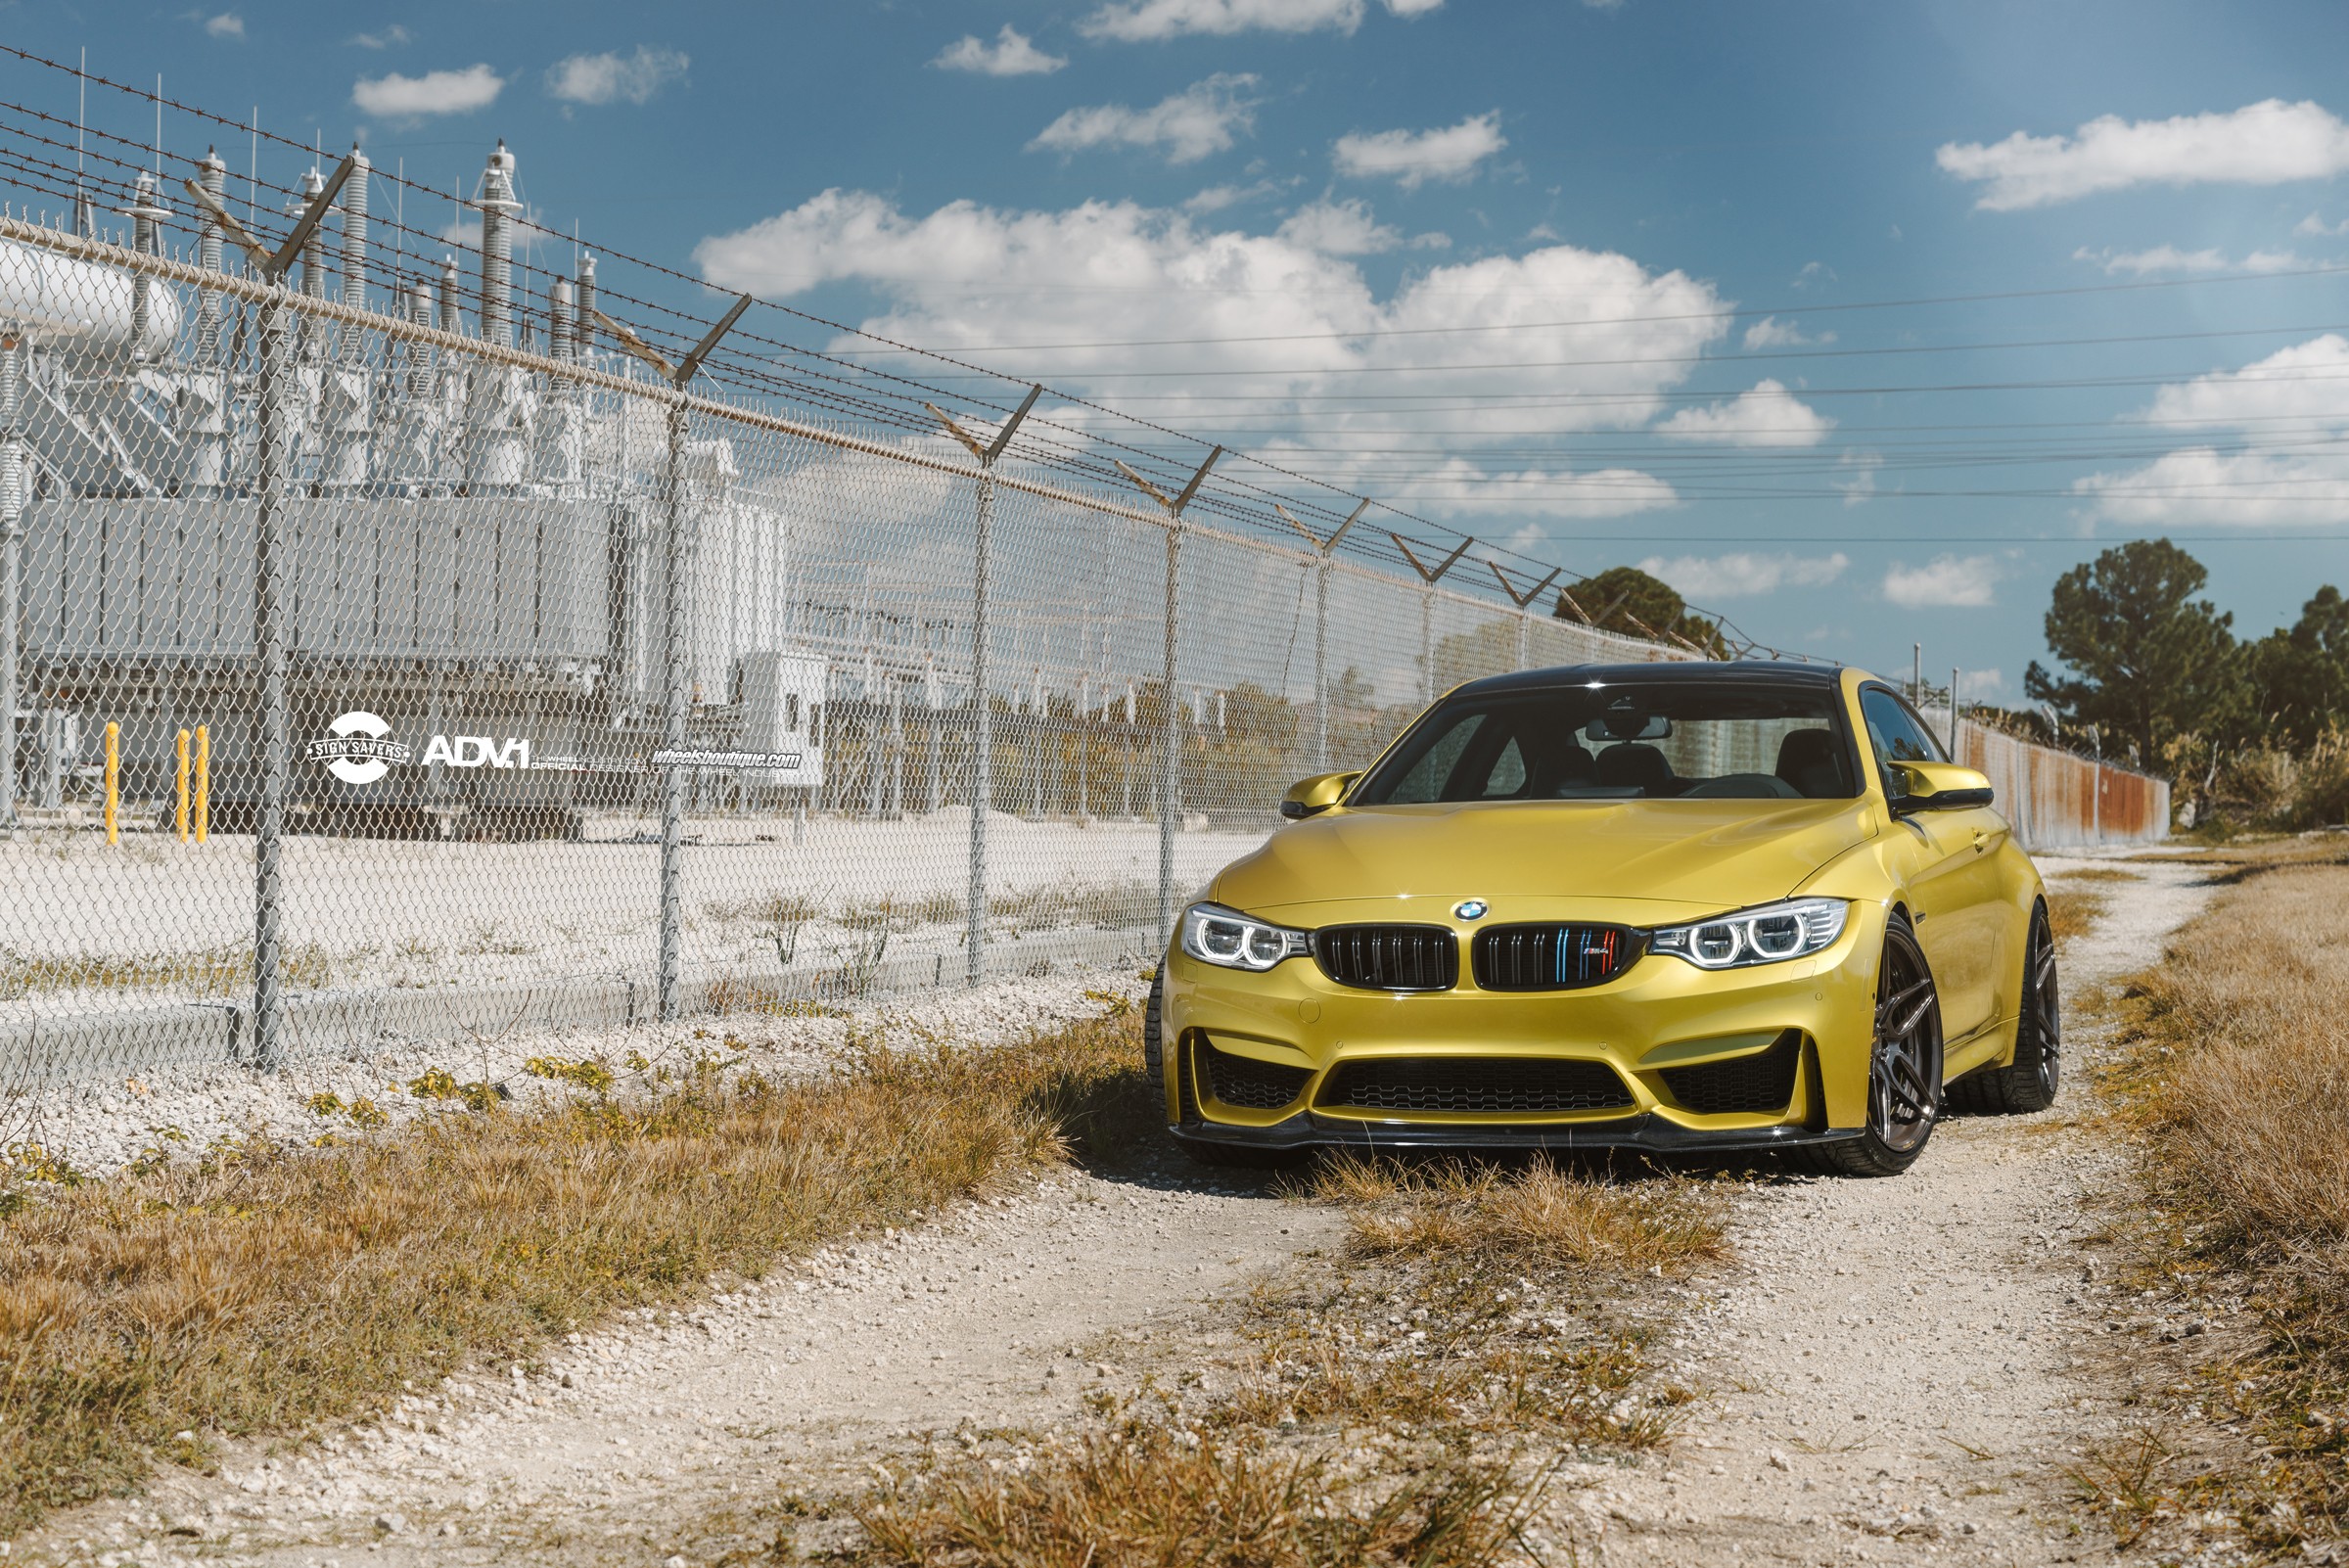 General 2400x1602 BMW BMW M4 ADV.1 Austin Yellow car vehicle fence yellow cars German cars